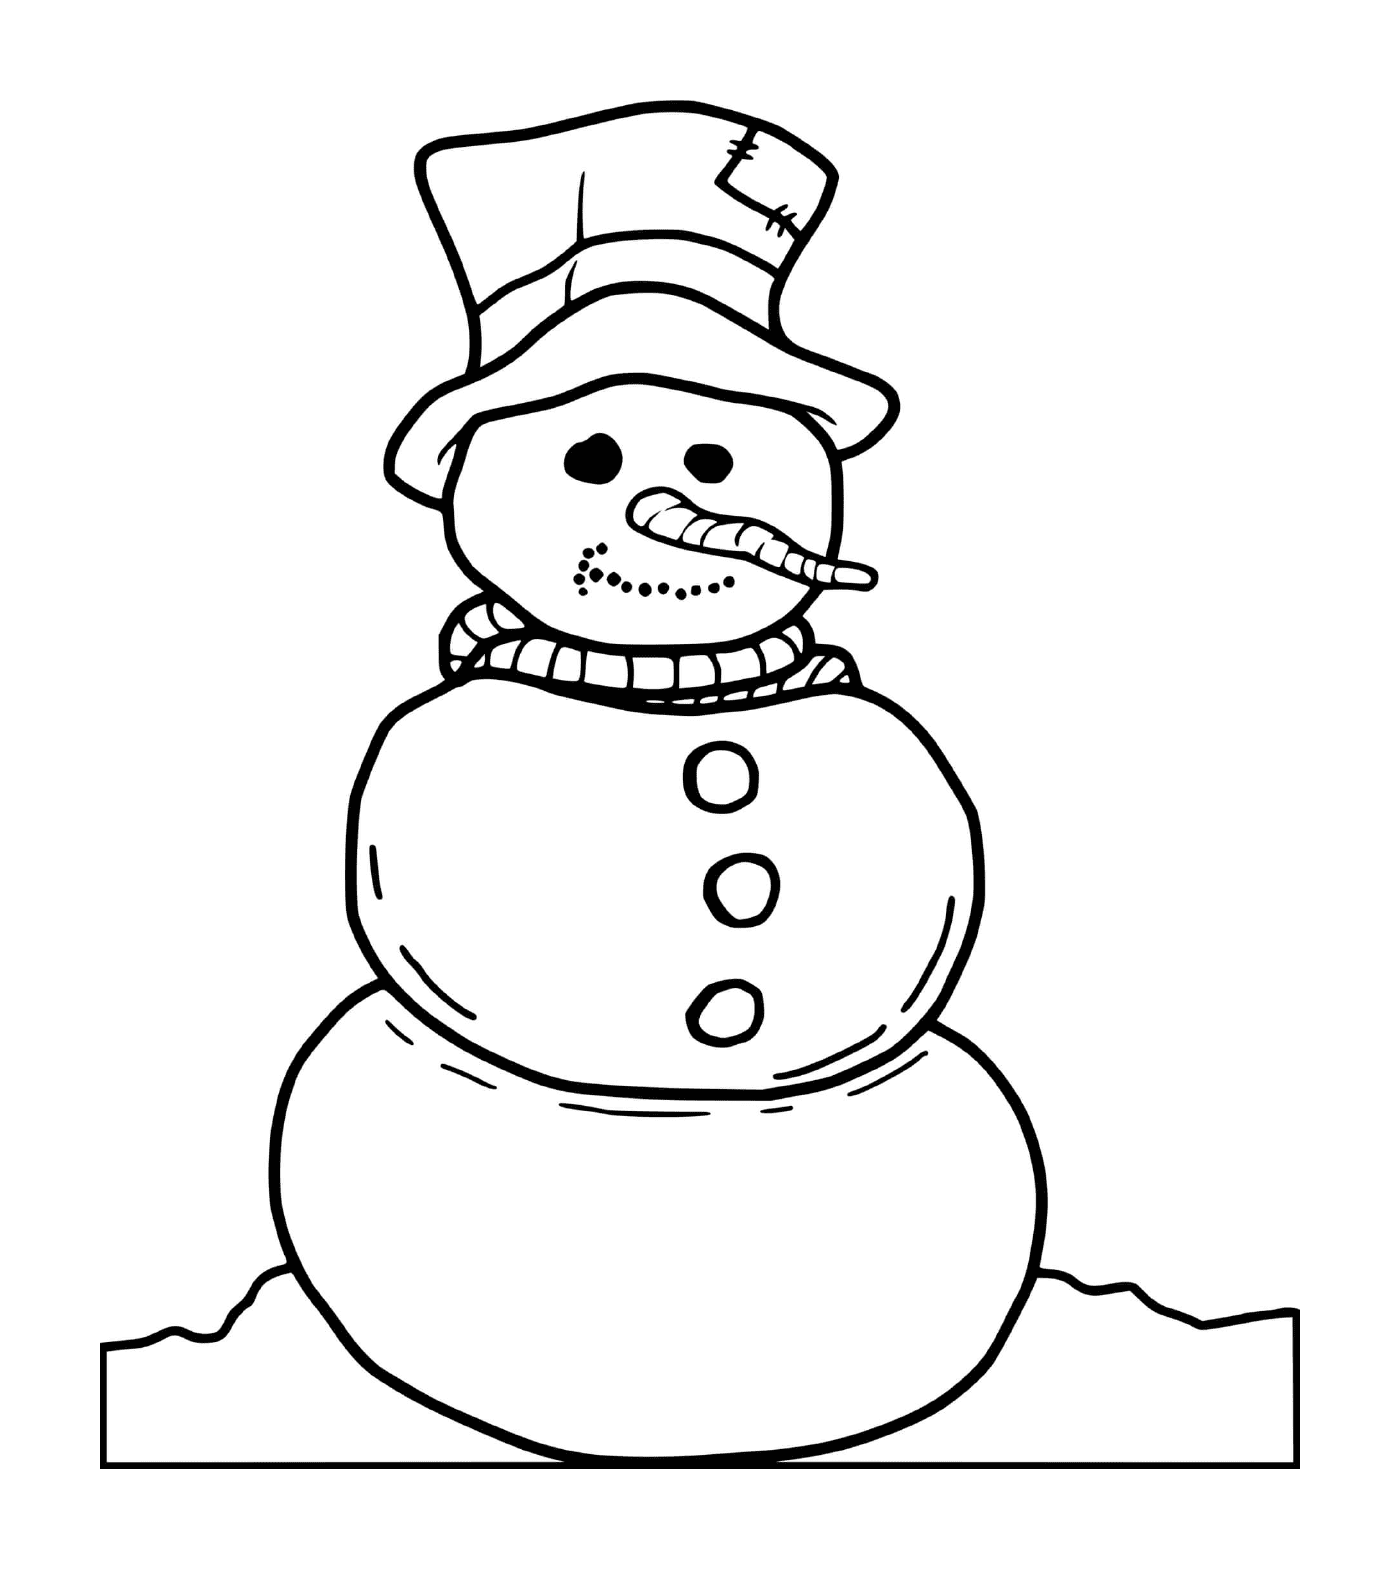   Bonhomme de neige sans bras 